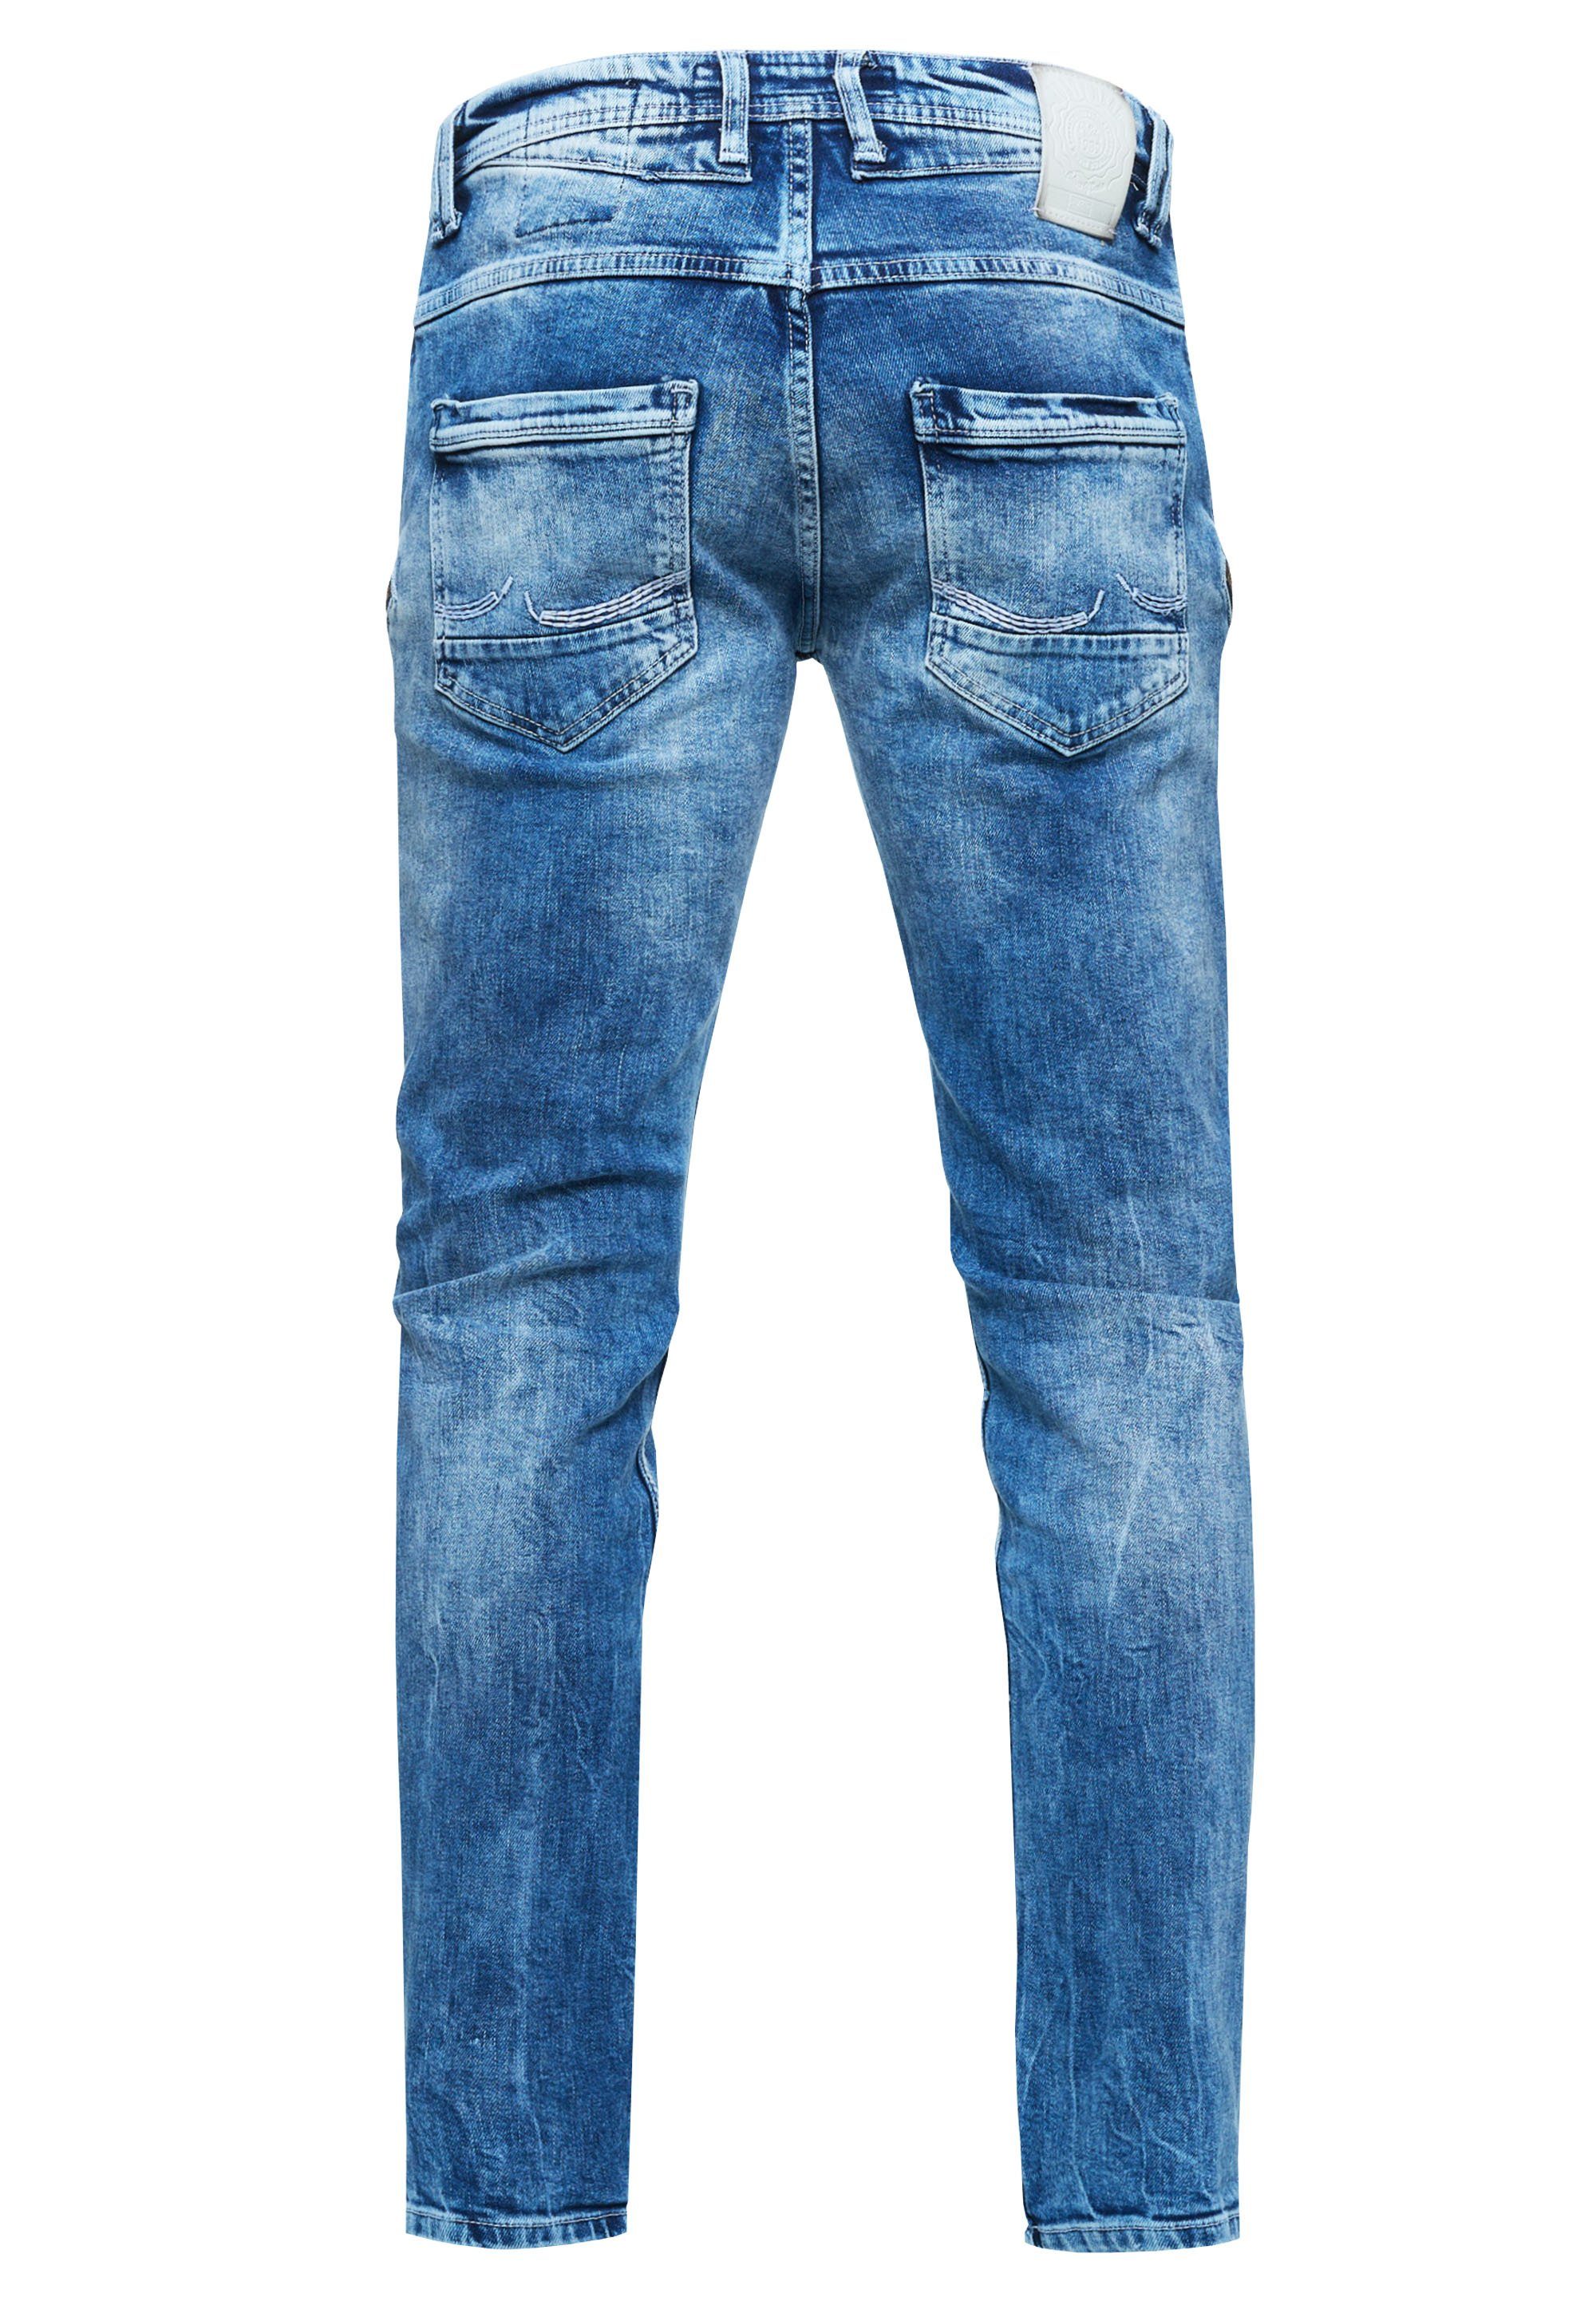 Rusty Neal Straight-Jeans Zierelementen blau-denim mit MORI trendigen